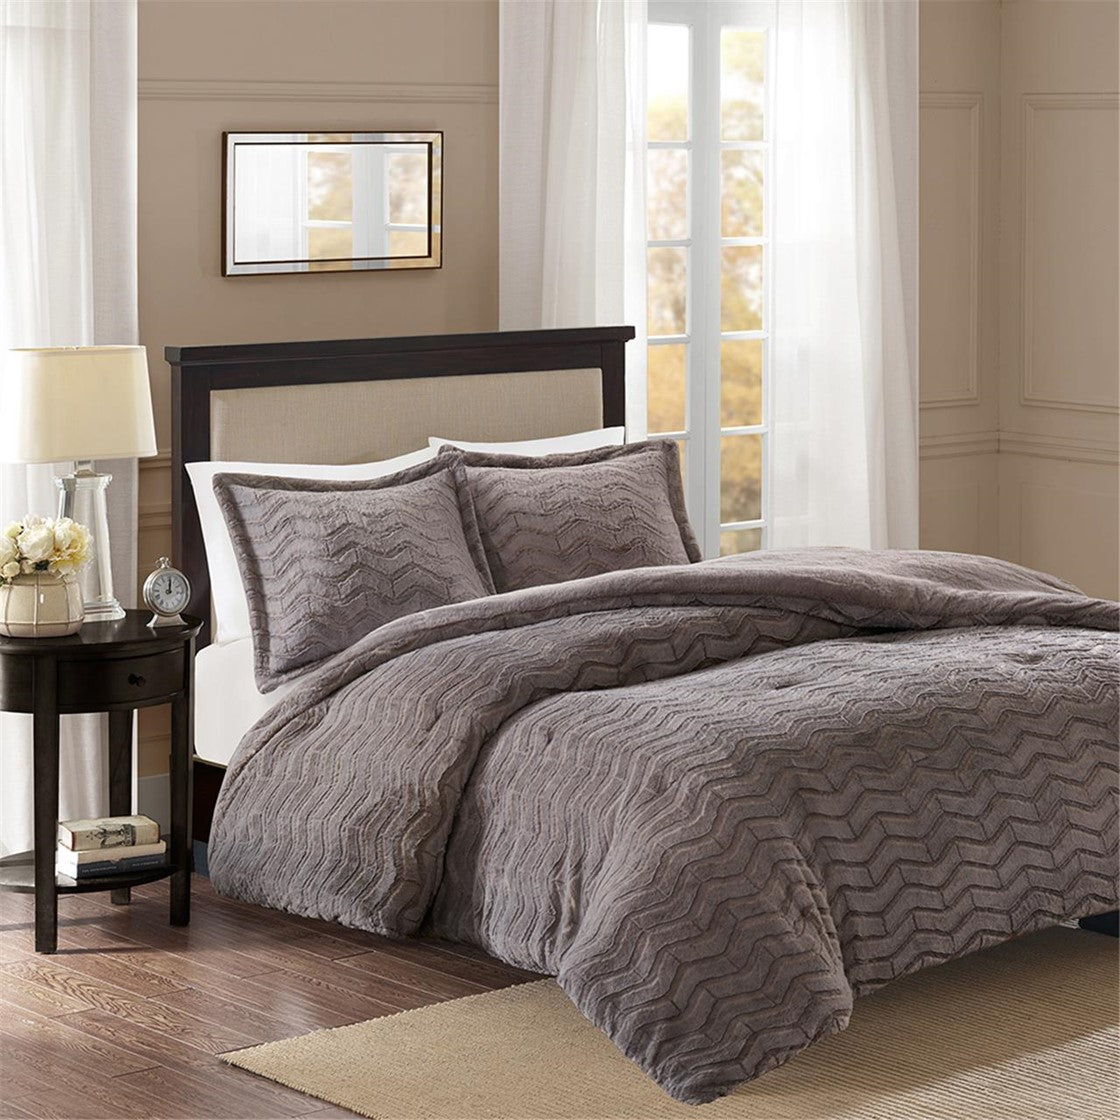 Madison Park Sloan Plush Down Alternative Comforter Mini Set - Grey - Full Size / Queen Size